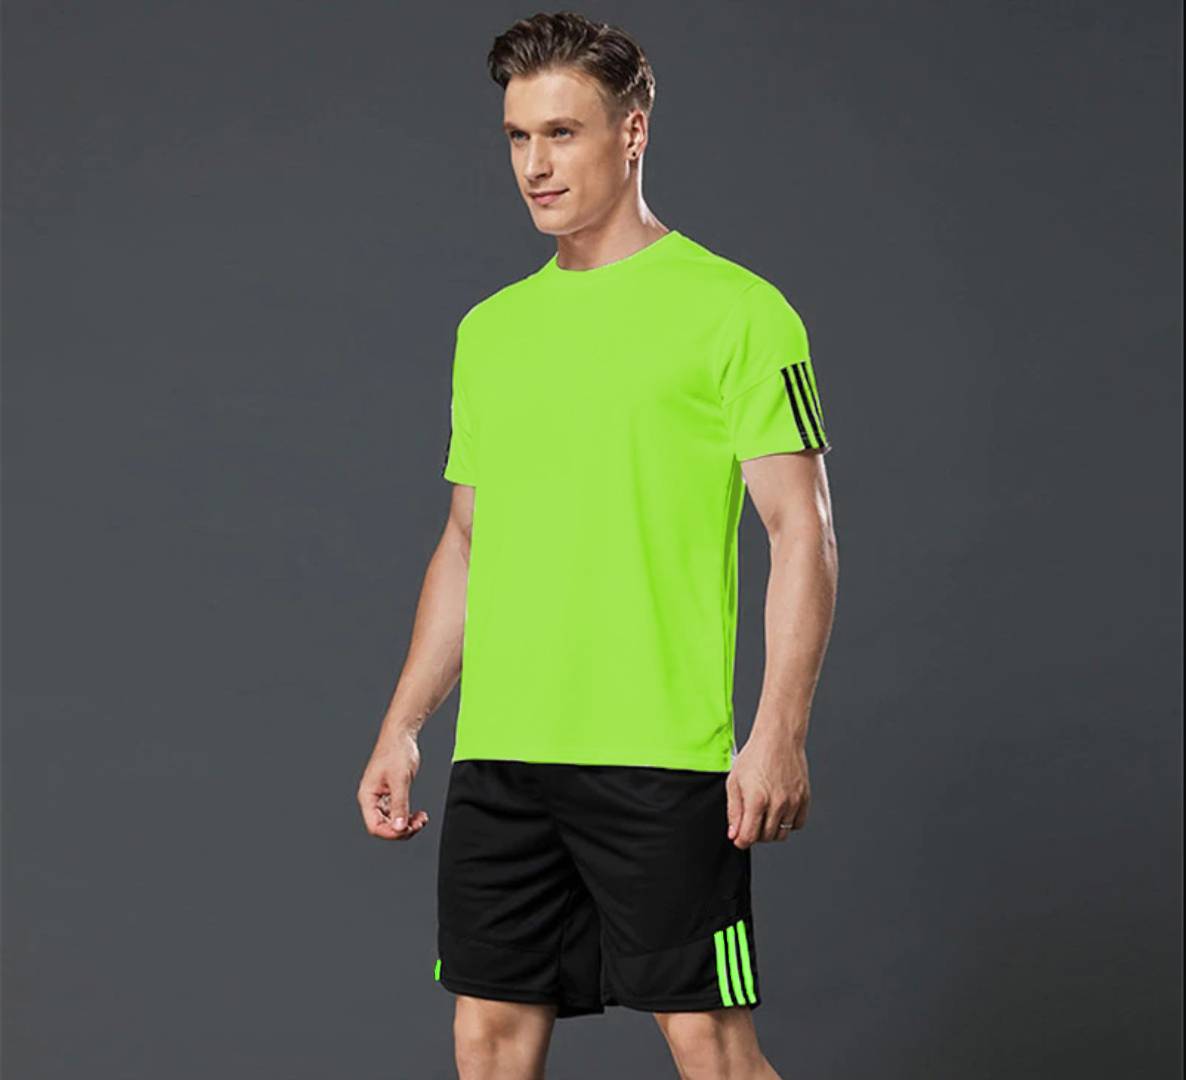 Men's Multicoloured Sports T Shirt & Shorts Set